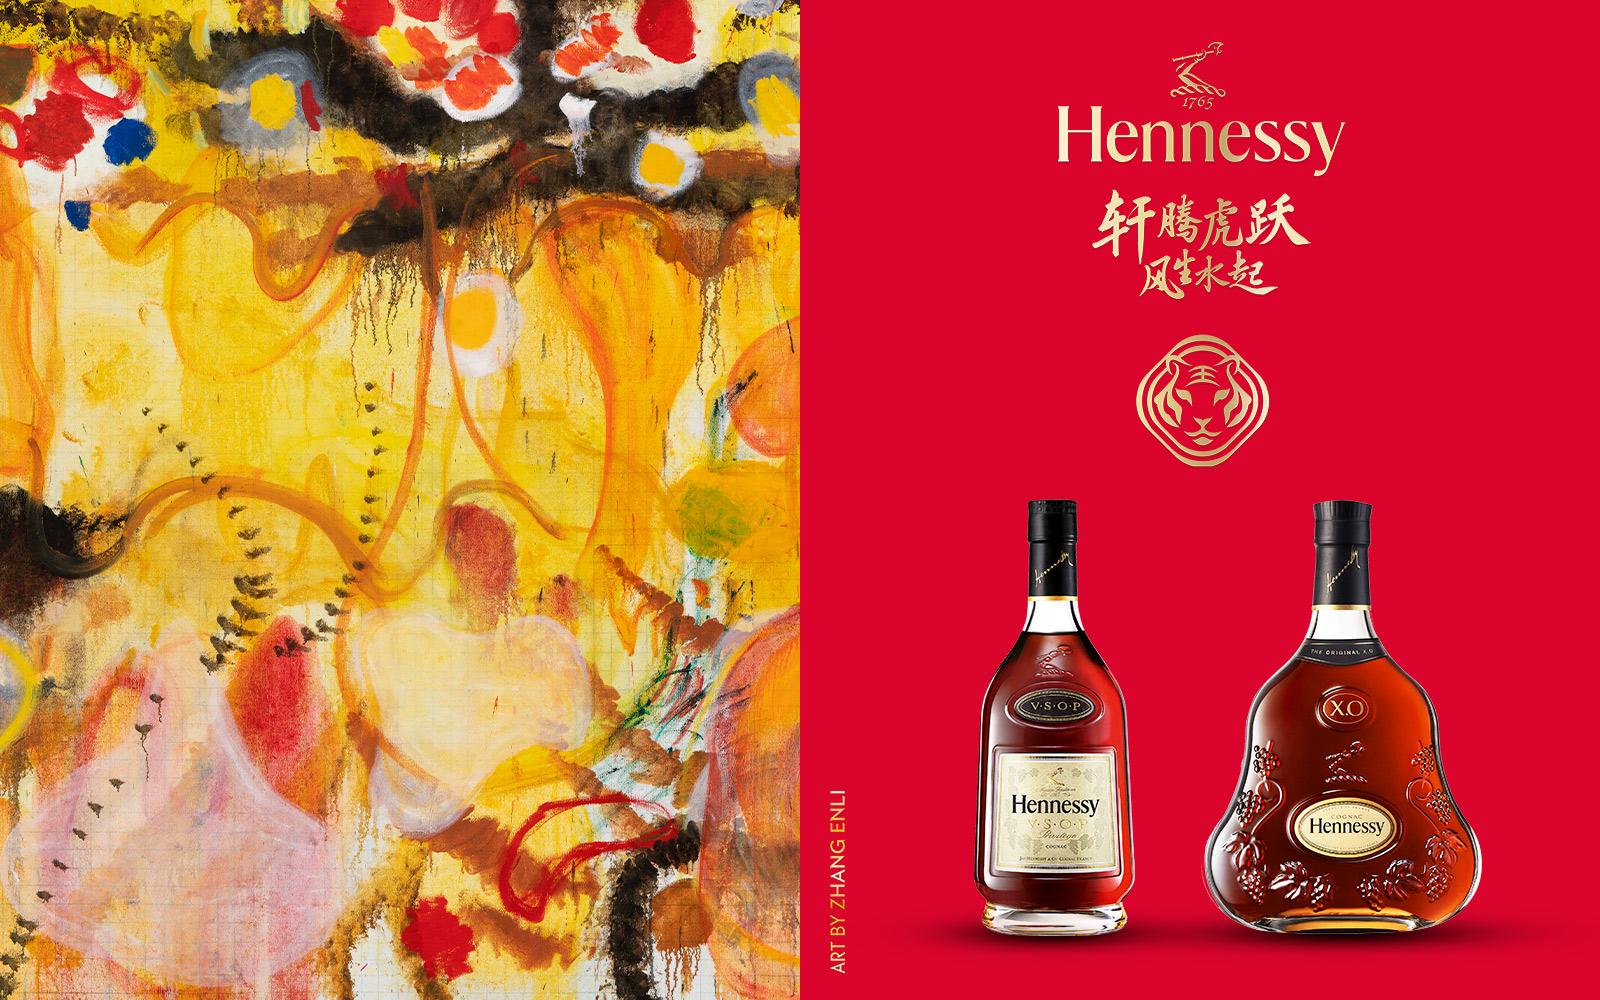 Hennessy V.S.O.P Privilege x Zhang Enli CNY 2022 Edition